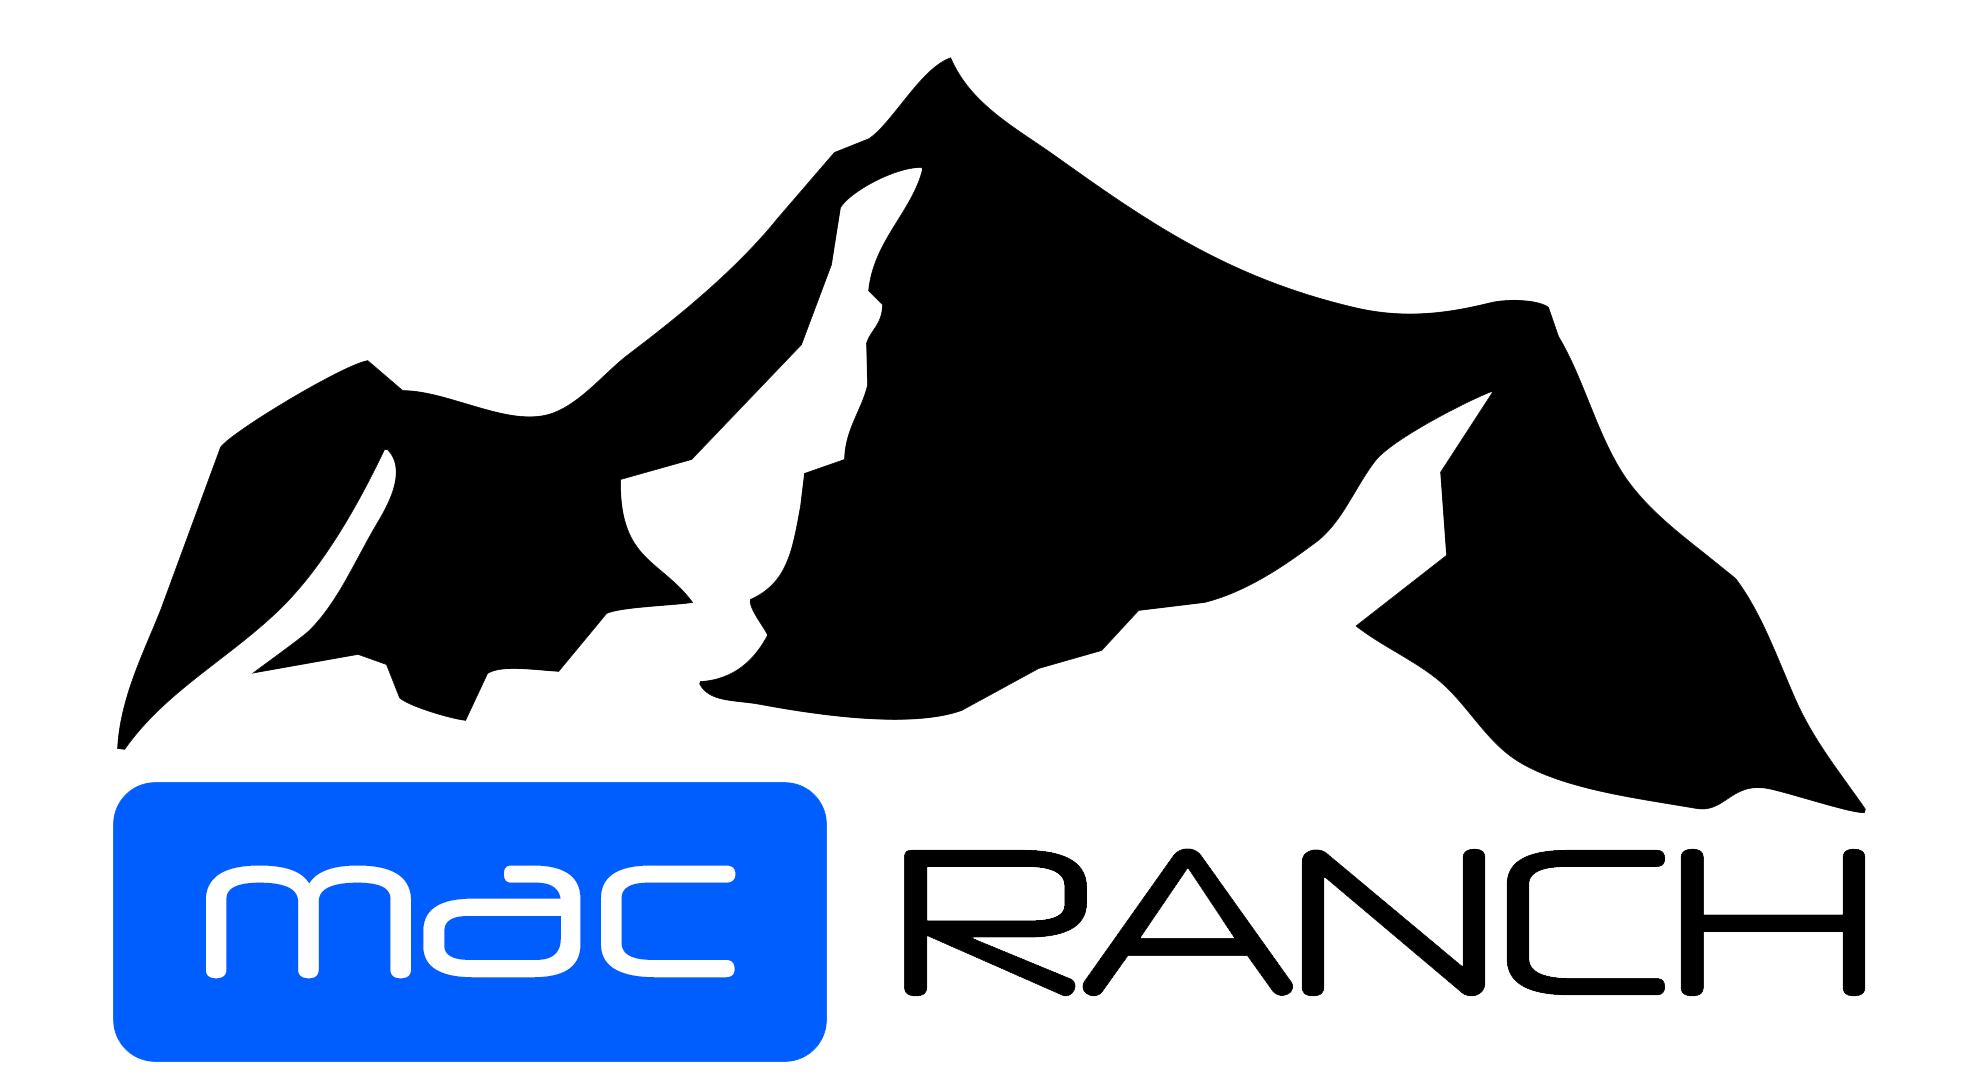 The Mac Ranch Logo